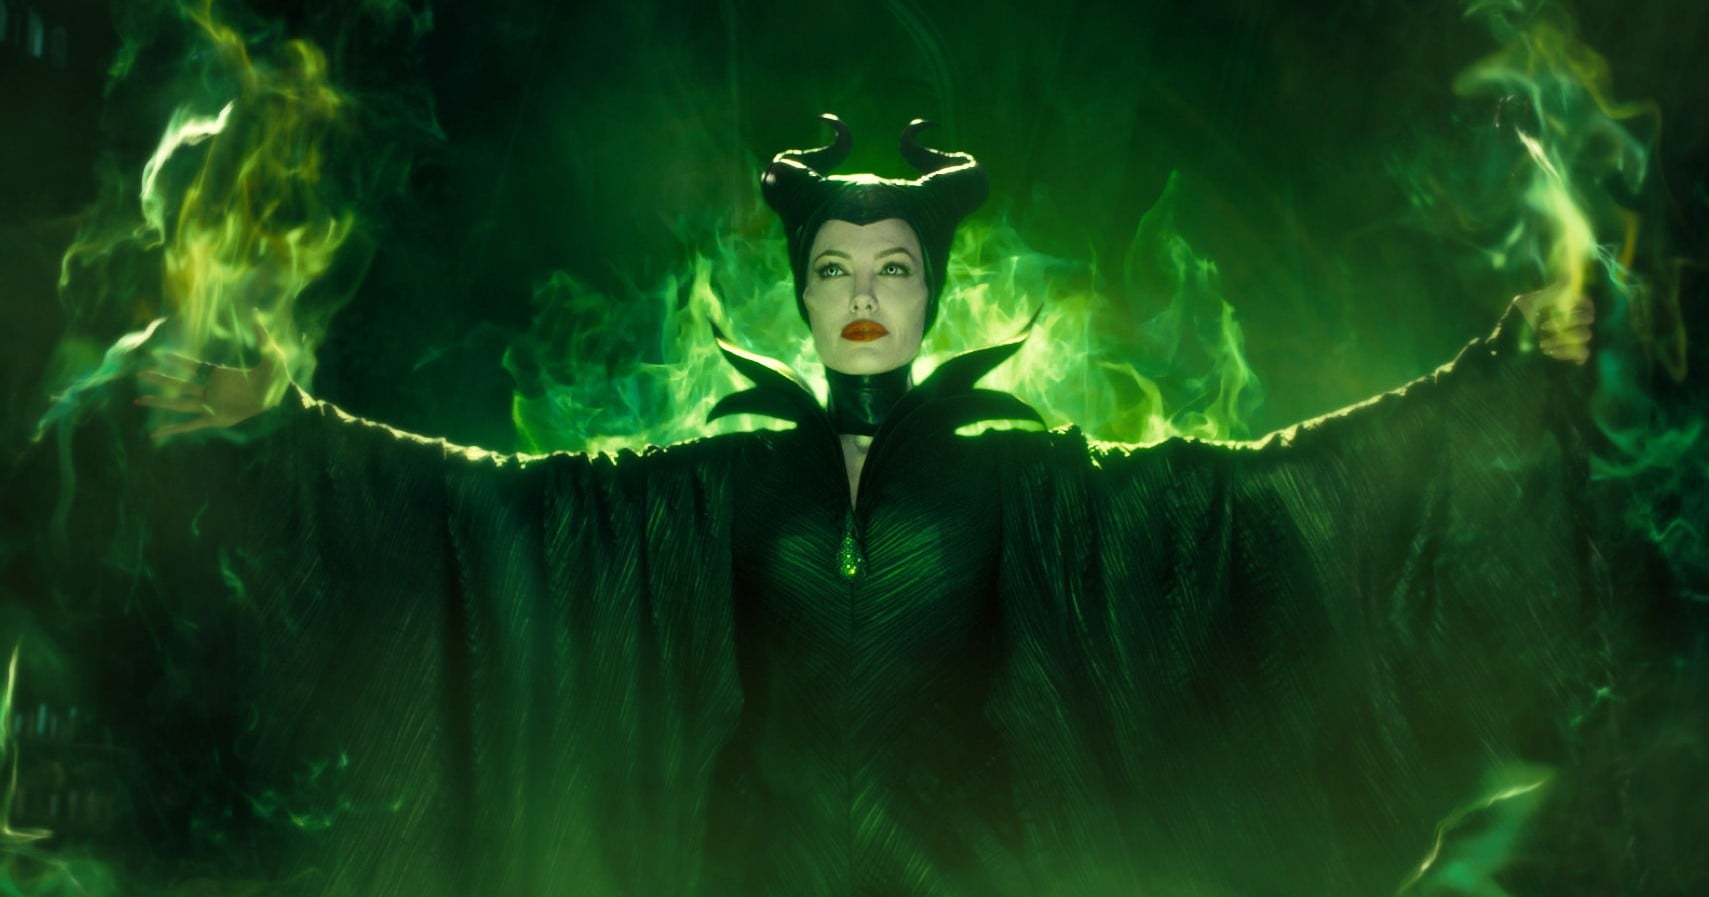 2020 Disney Maleficent - Limited Edition